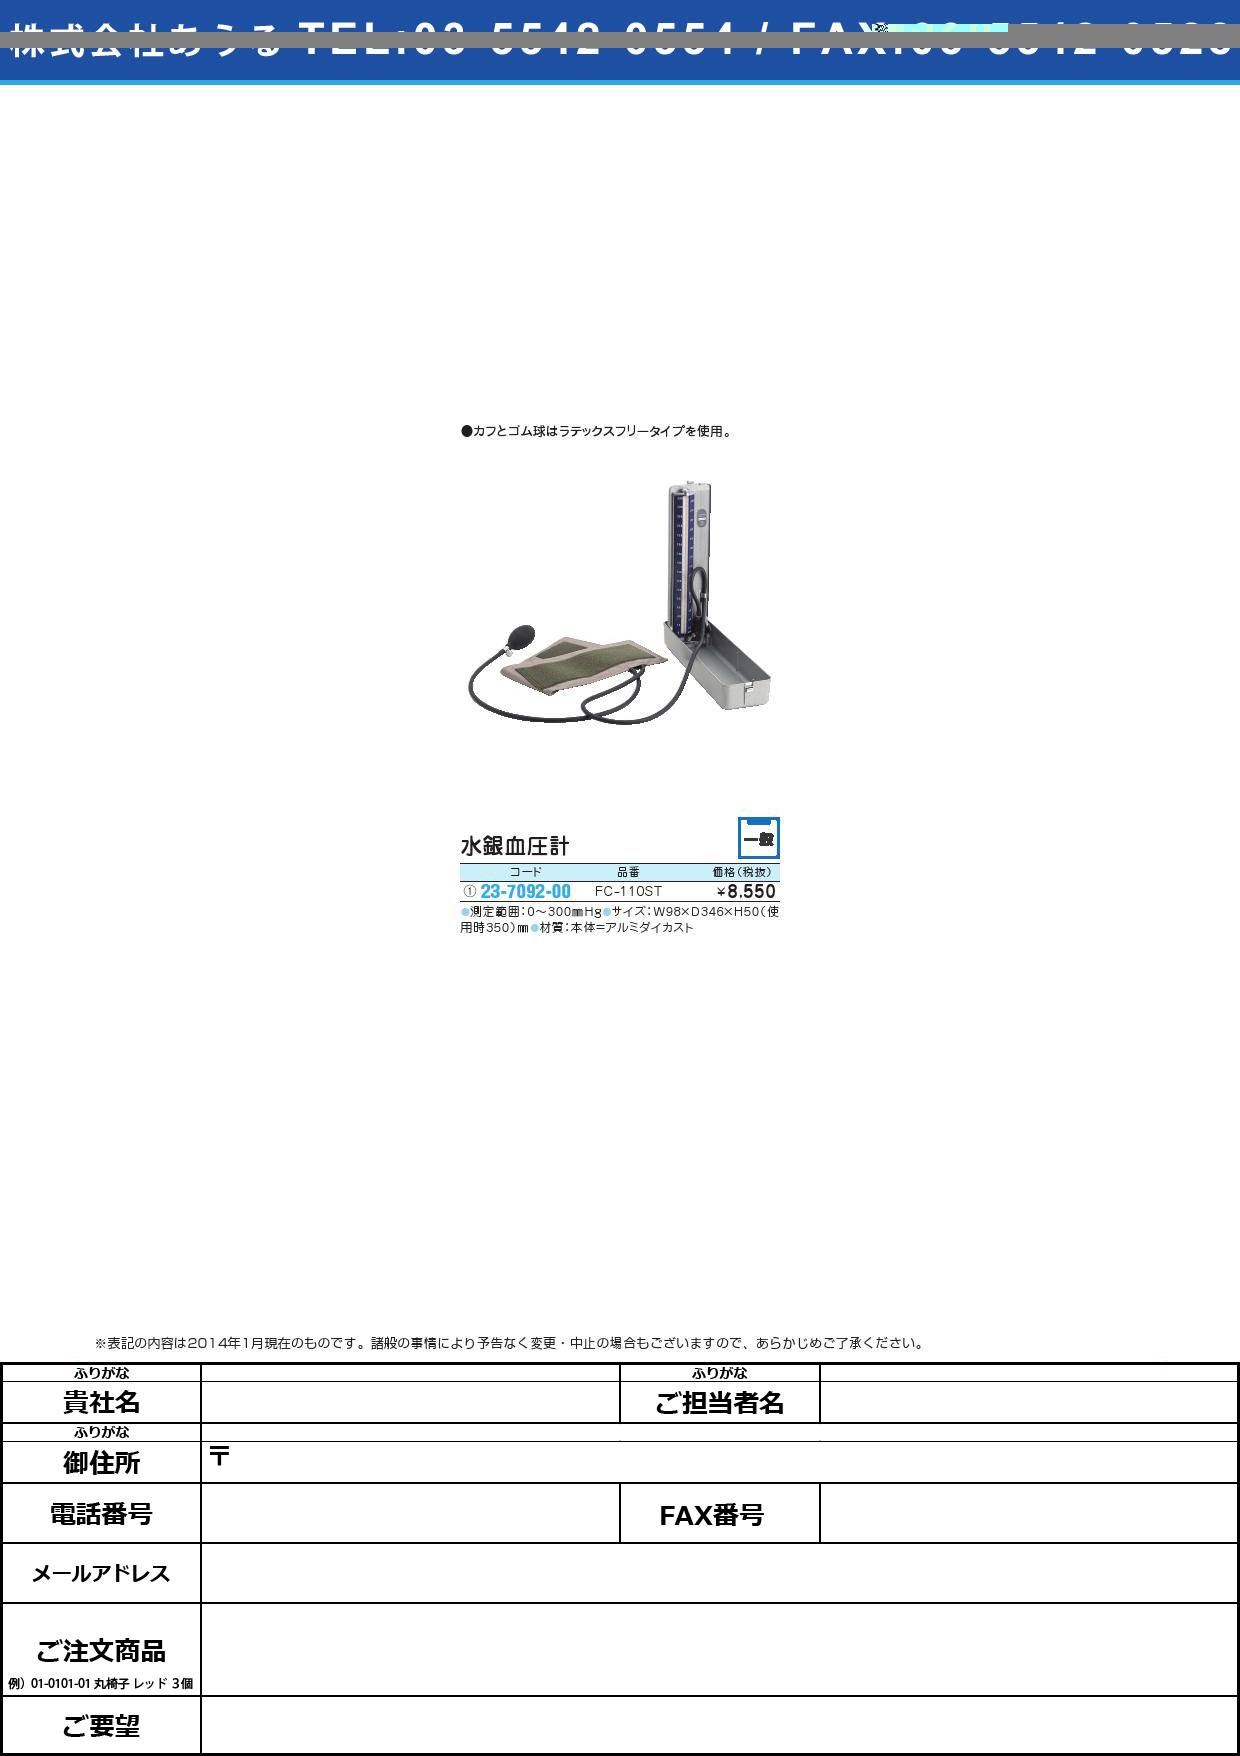 (23-7092-00)水銀血圧計 ｽｲｷﾞﾝｹﾂｱﾂｹｲ(23-7092-00)FC-110ST【1台単位】【2014年カタログ商品】